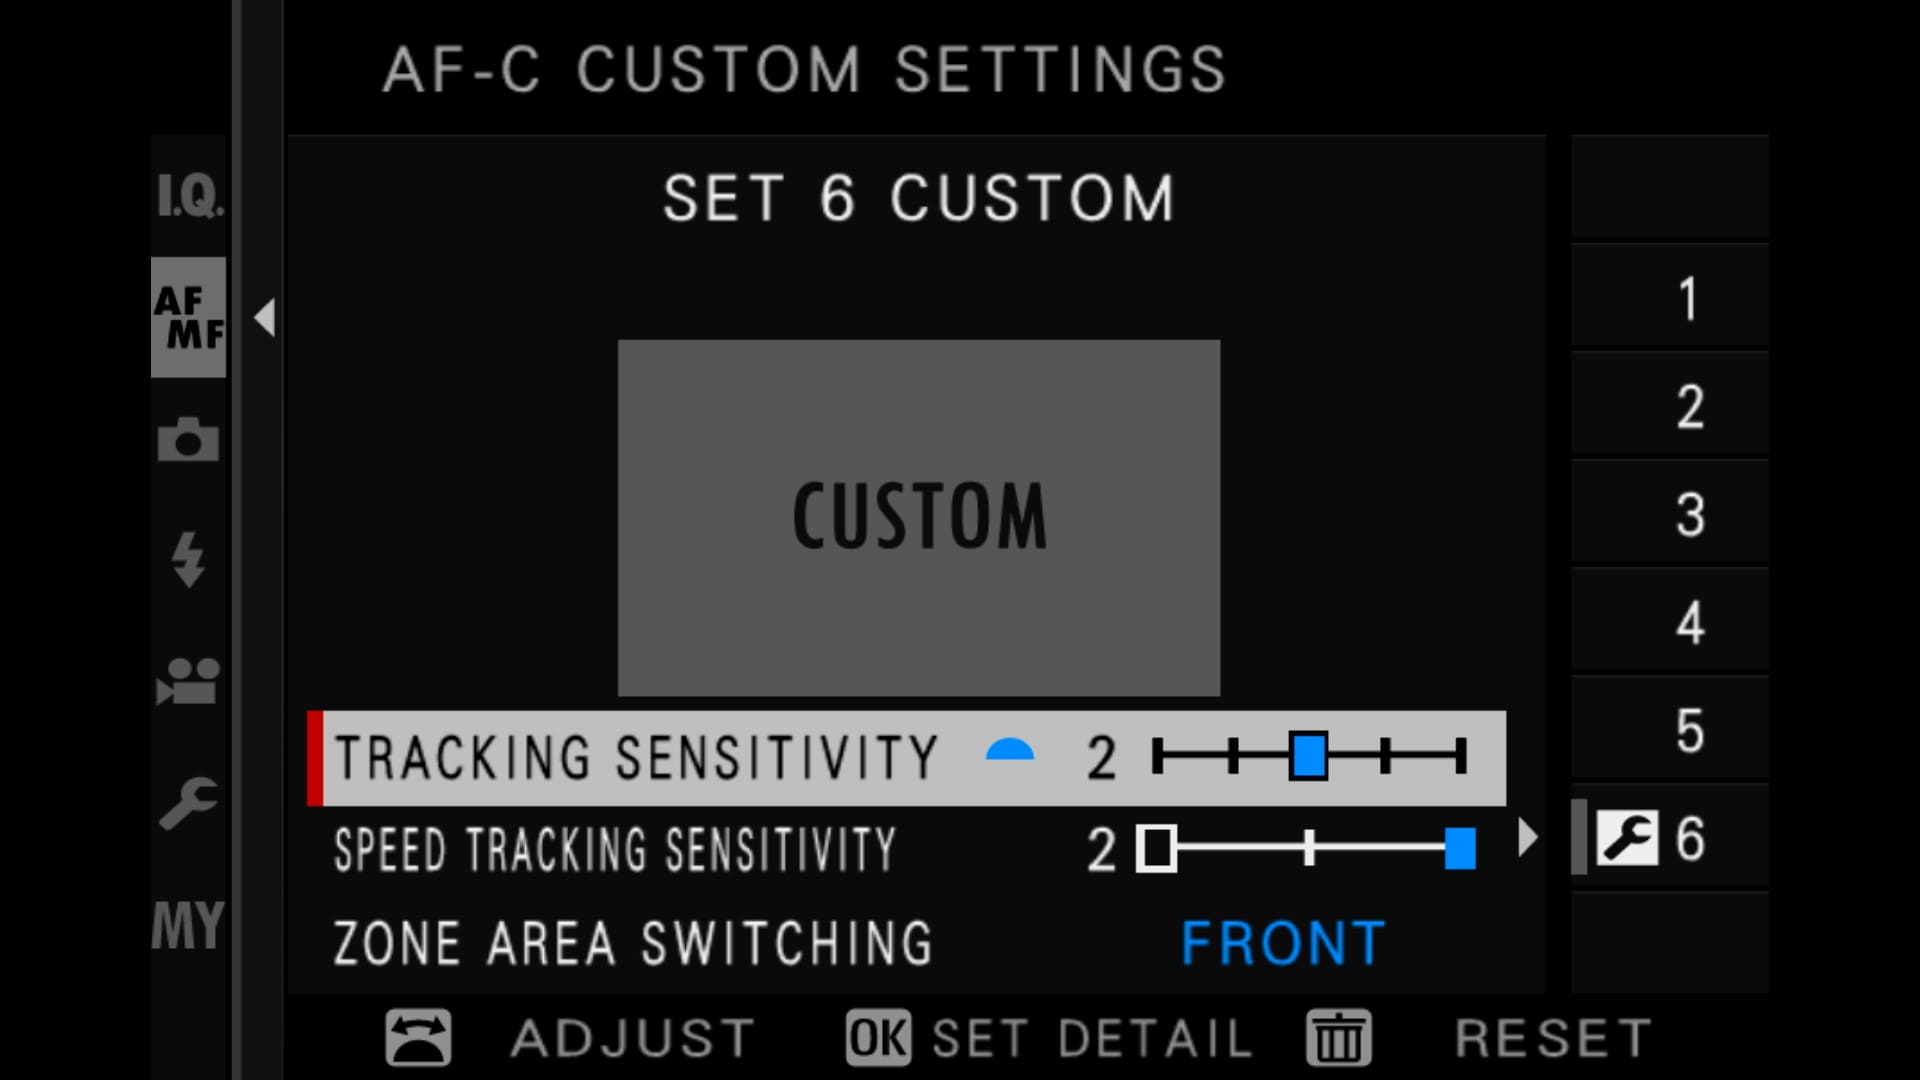 Tracking Sensitivity Set to 2